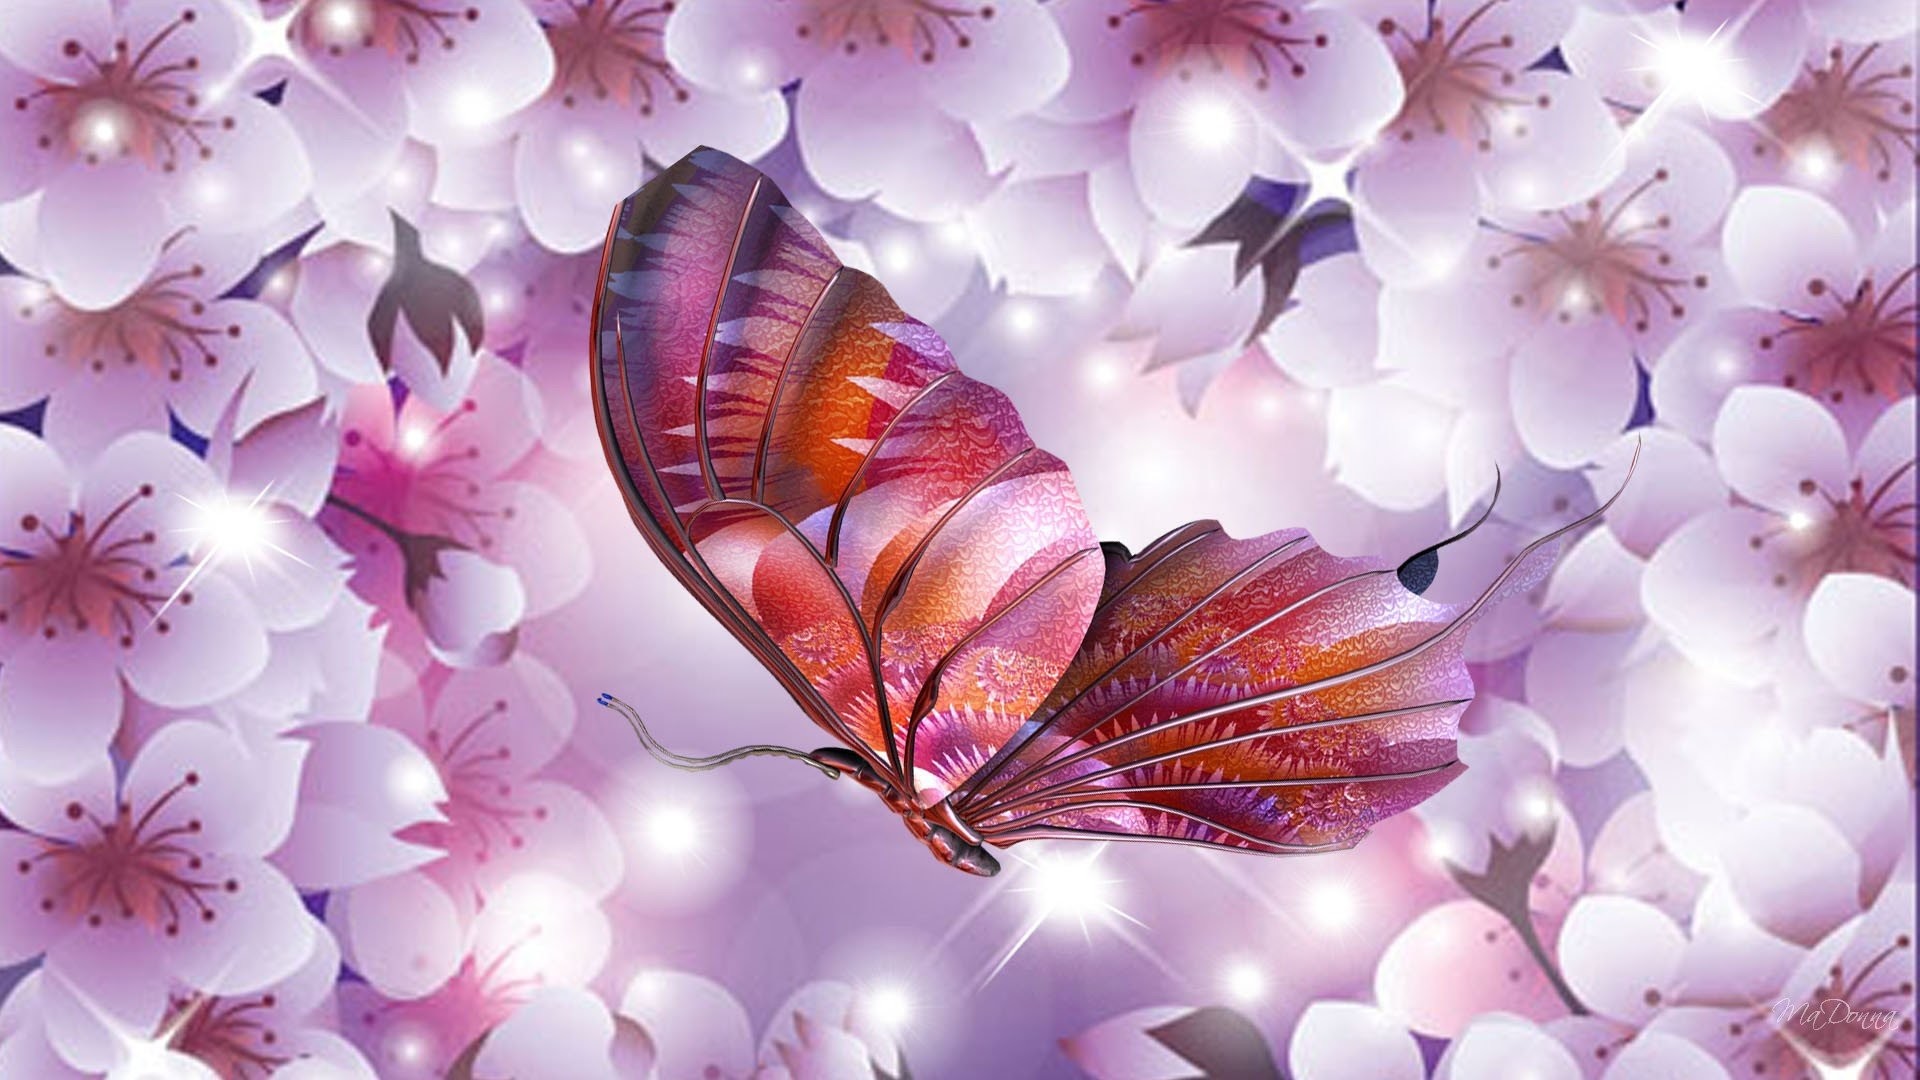 1920x1080 Lovely-Cherry-Blossom-to-brighten-your-Desktop-wallpaper-